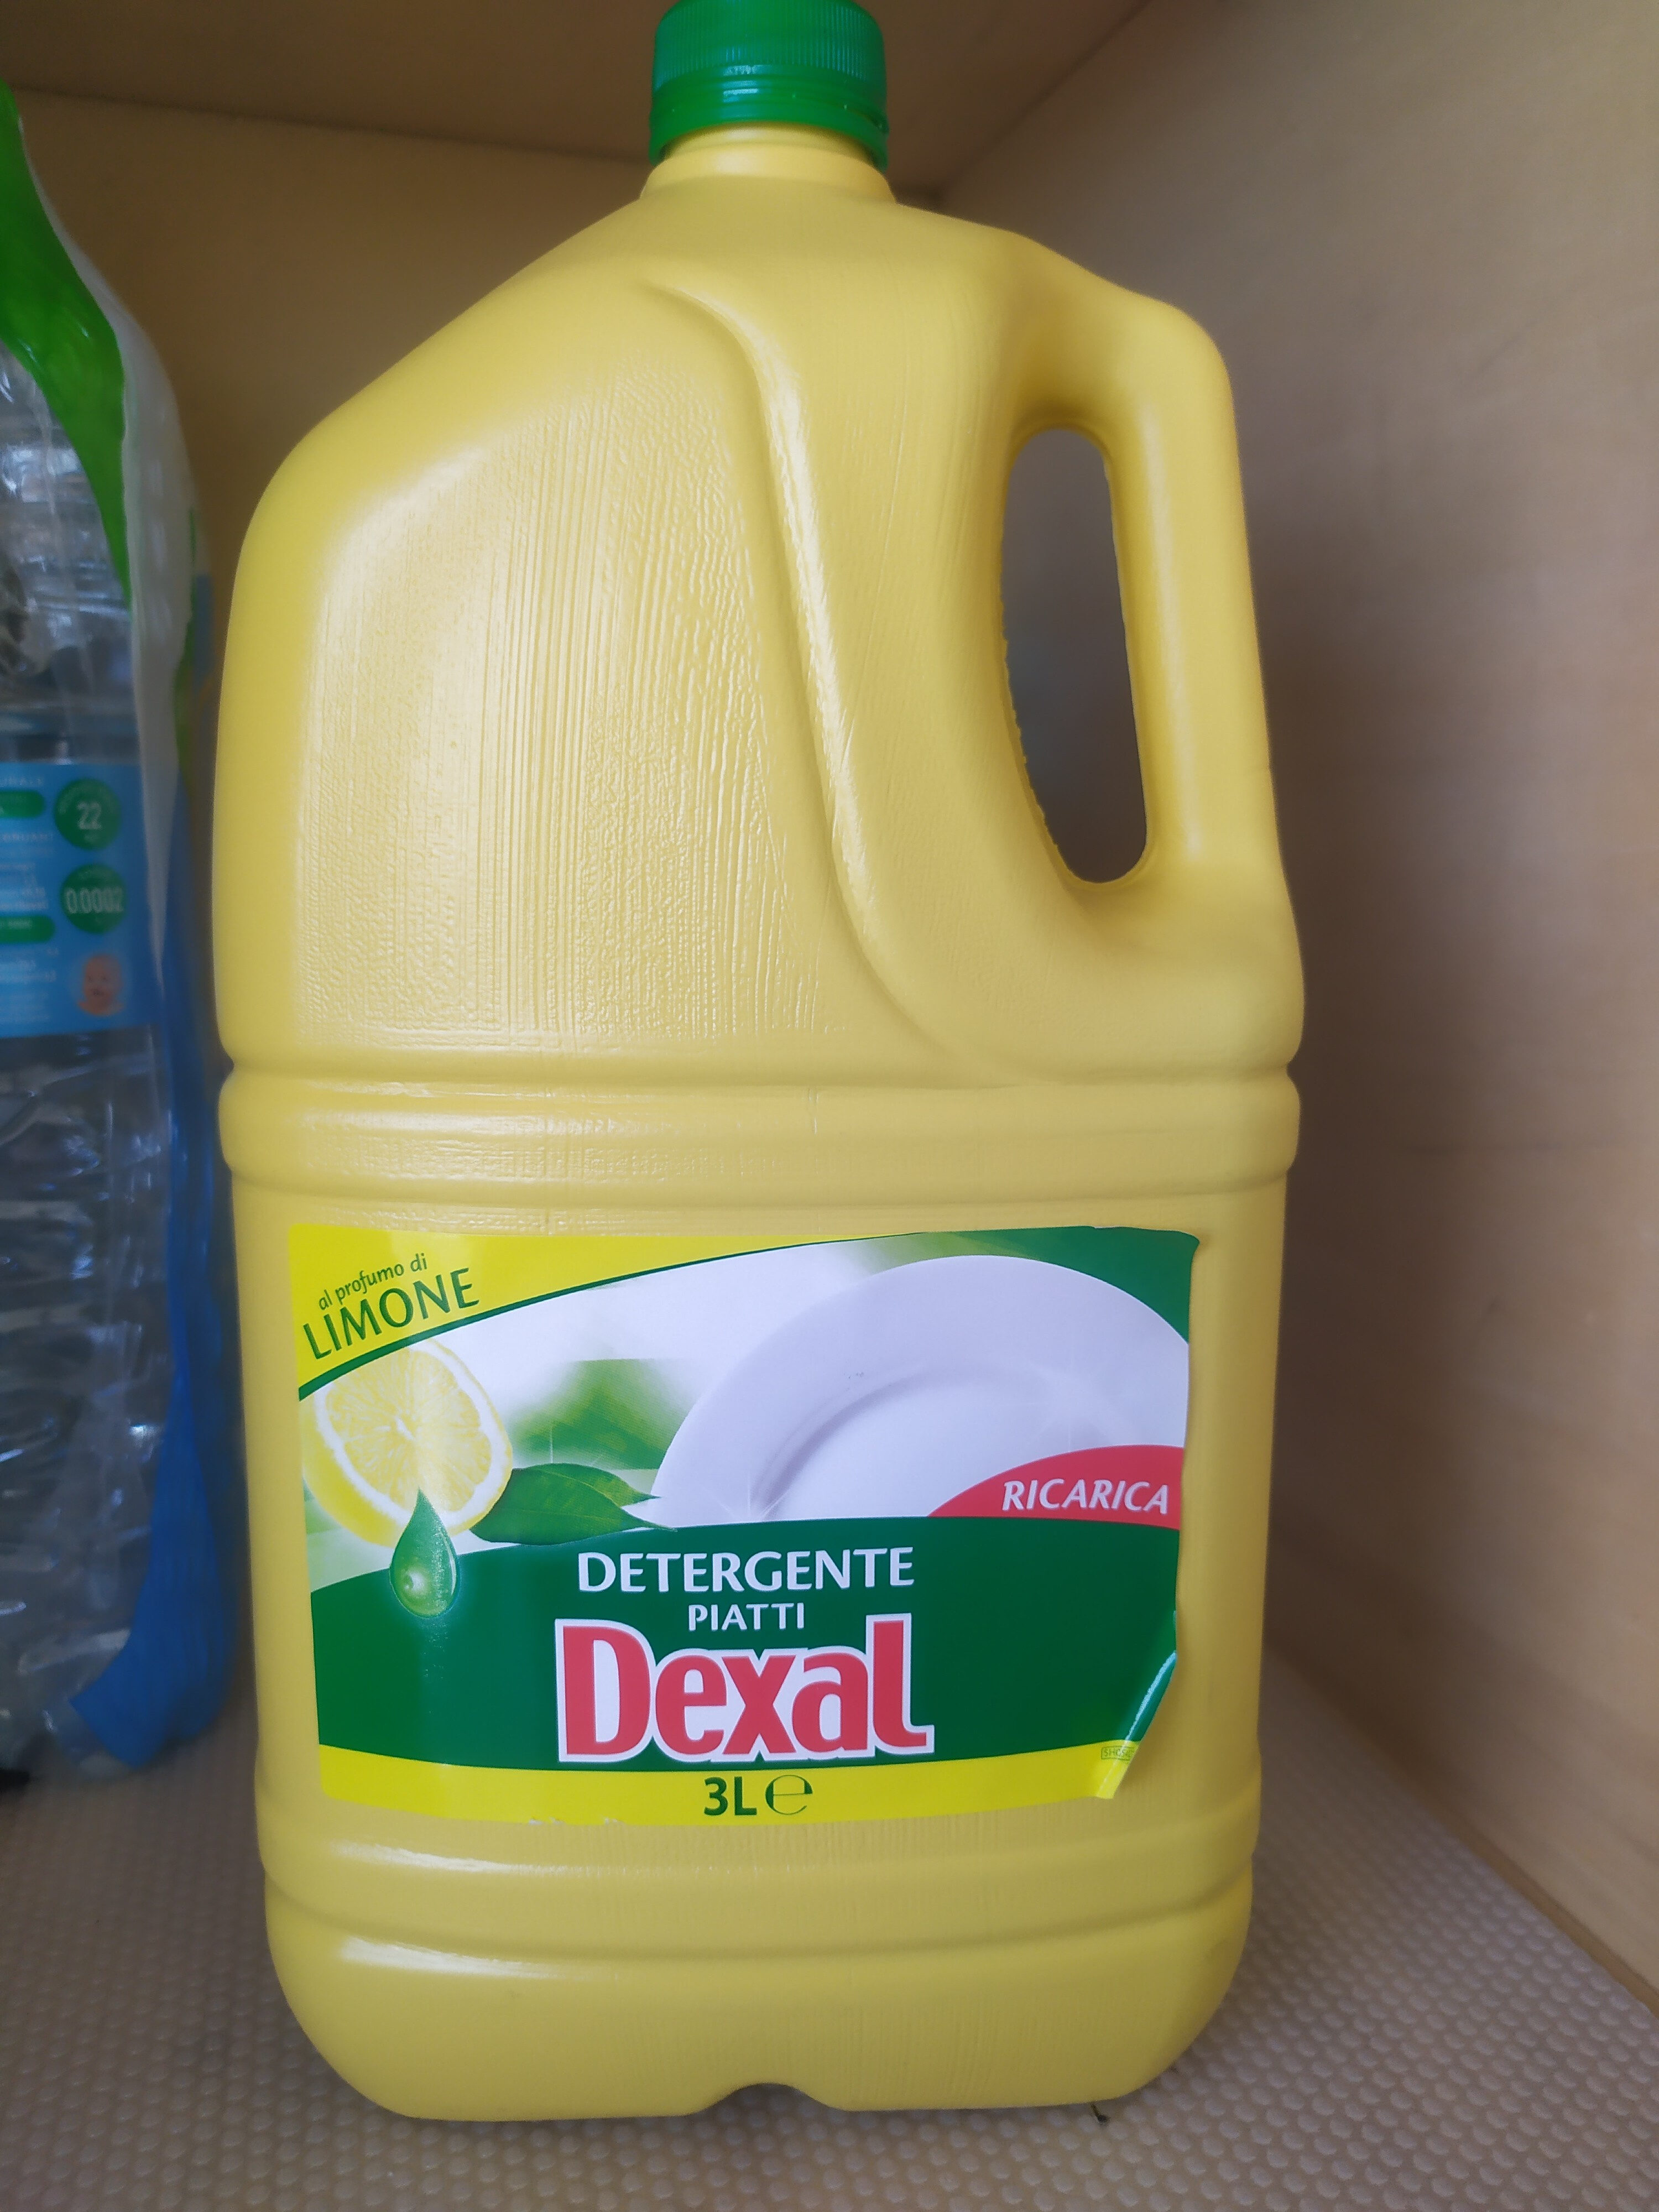 Dexal Detergente Piatti - Product - it